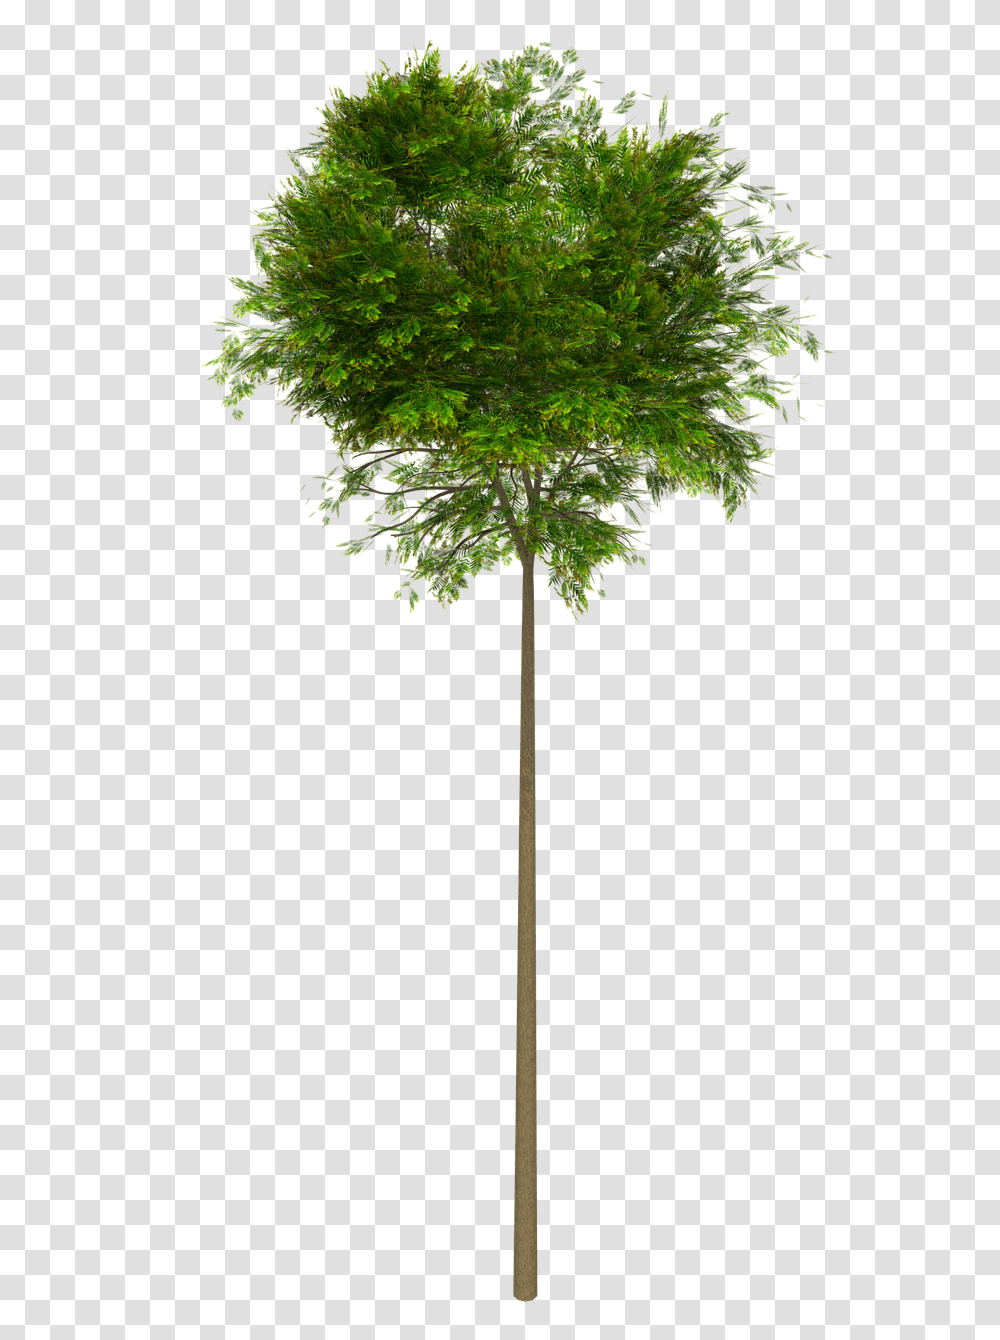 Download Hd Naturaleza High Tree, Plant, Maple, Oak, Cross Transparent Png